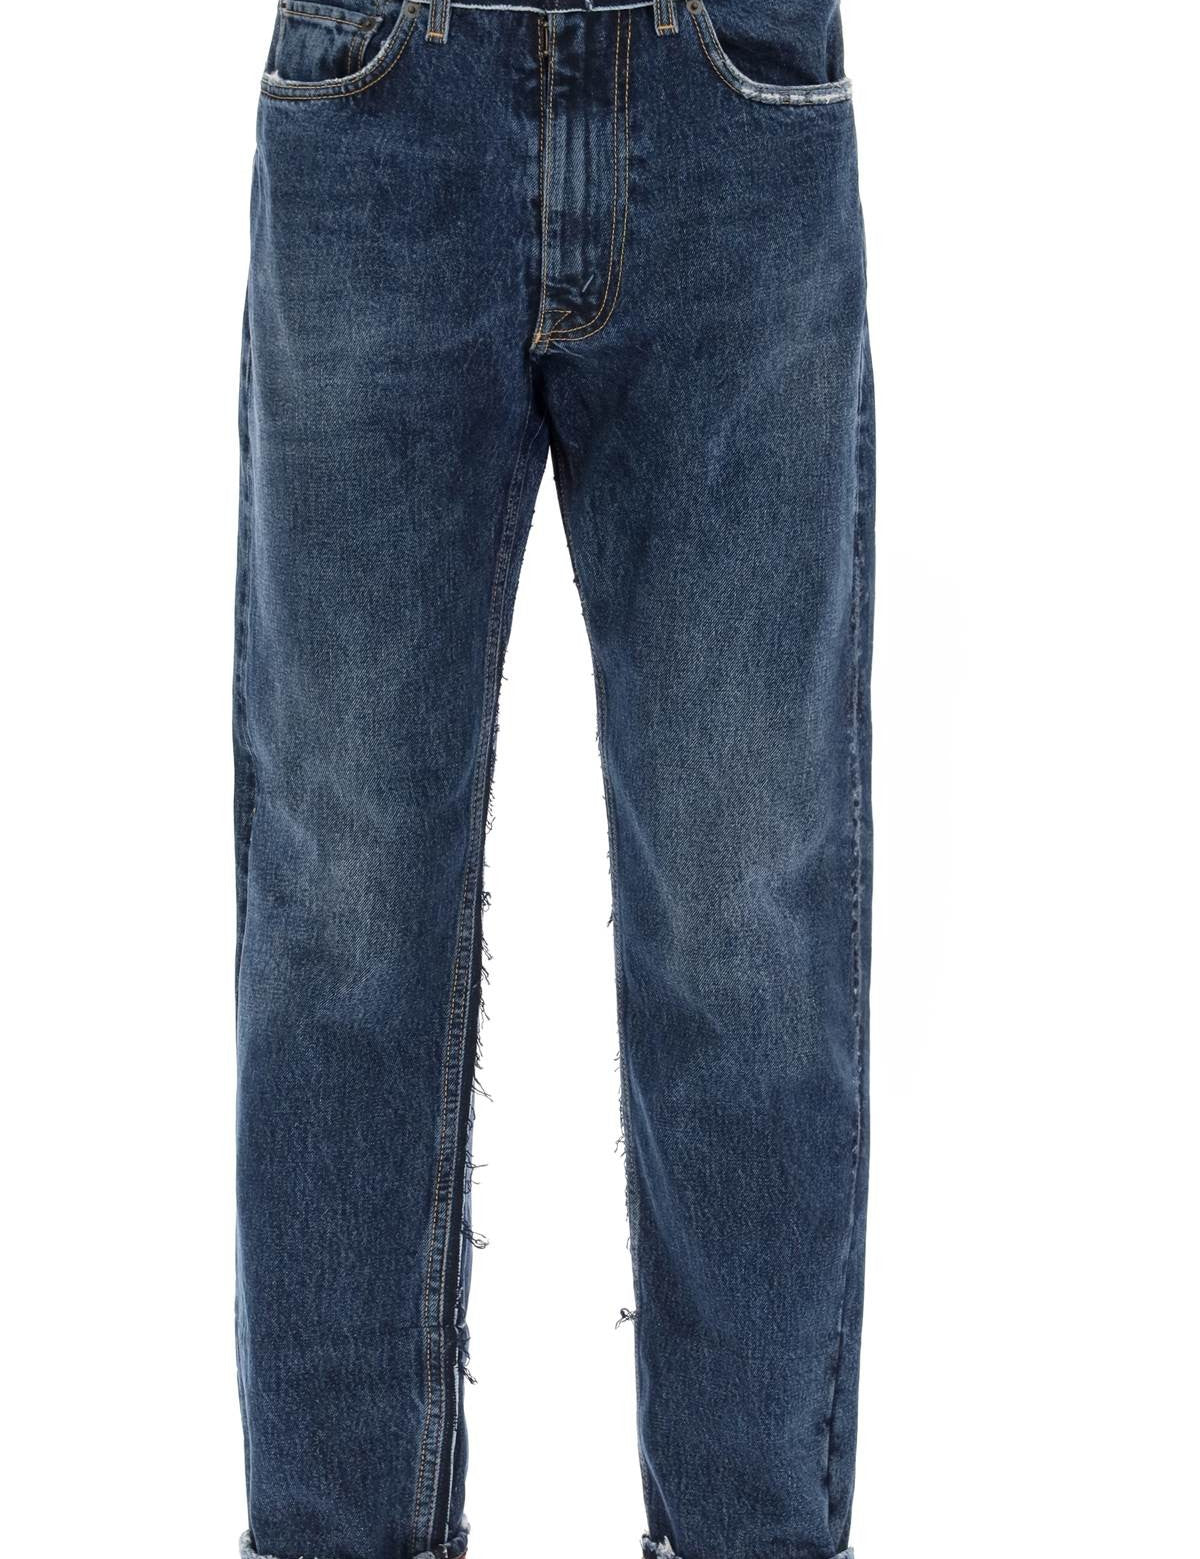 maison-margiela-pendleton-jeans-with-inserts.jpg